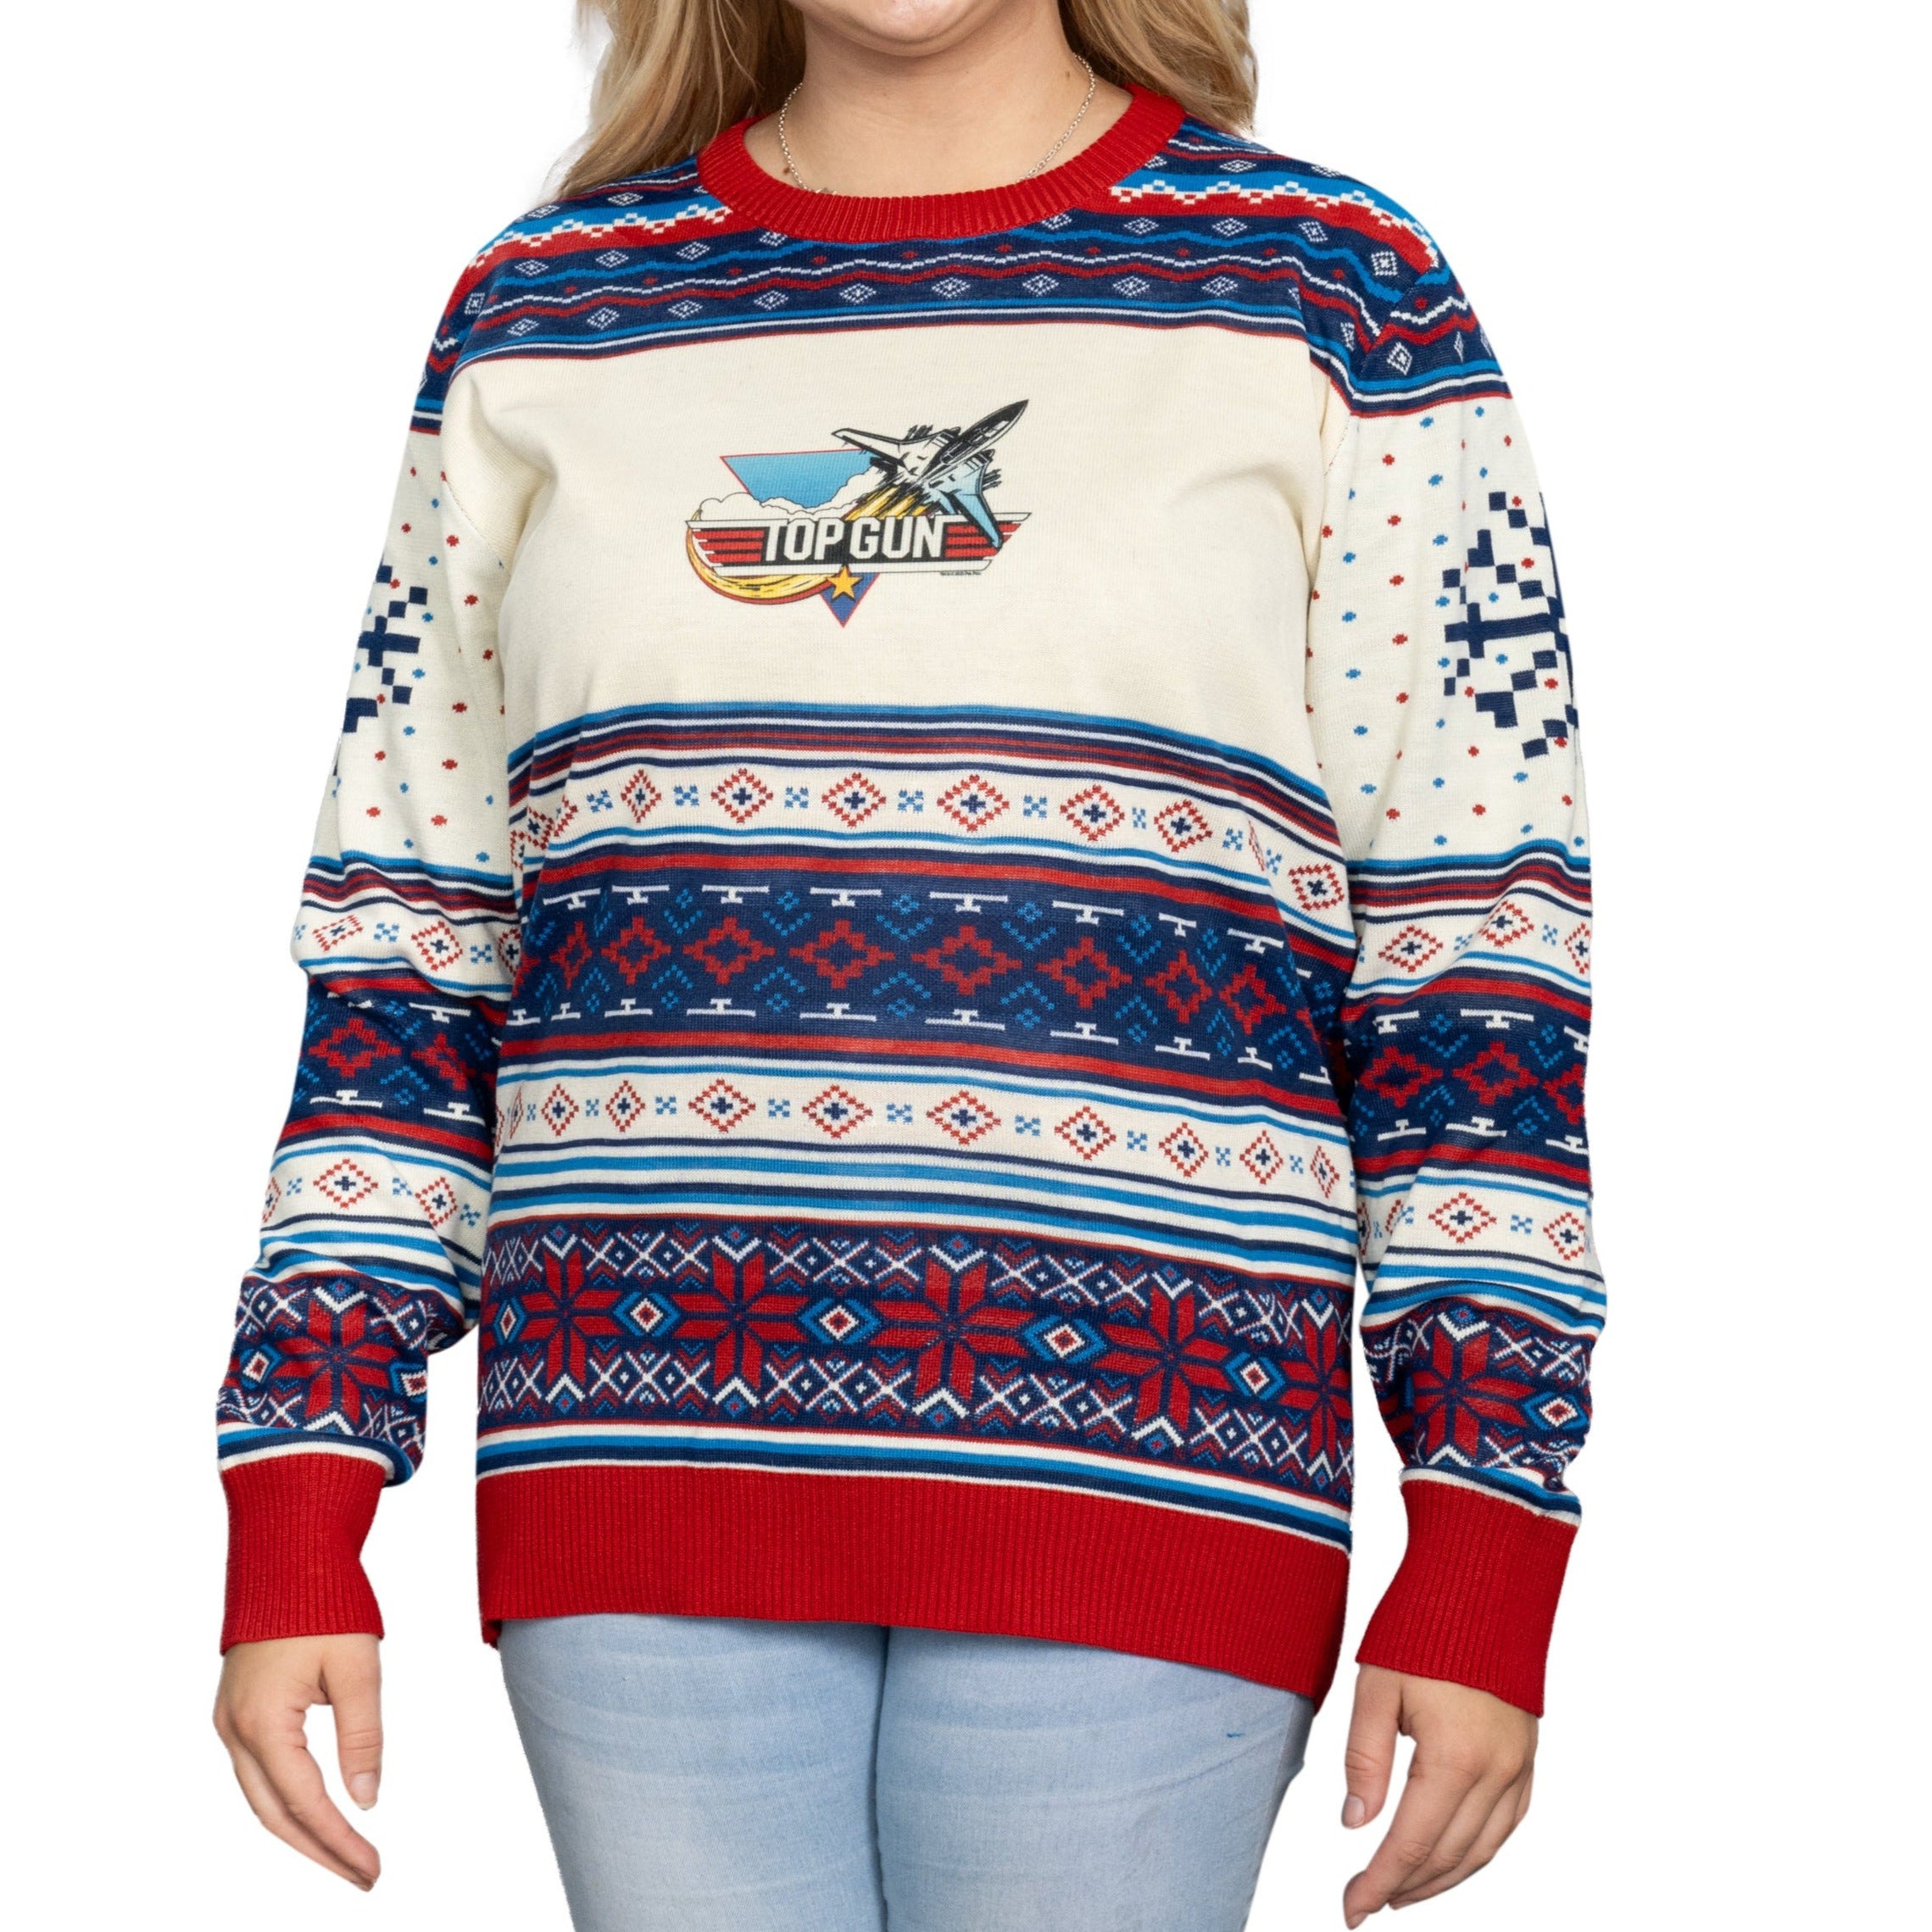 Top Gun Fighter Jet Christmas Sweater